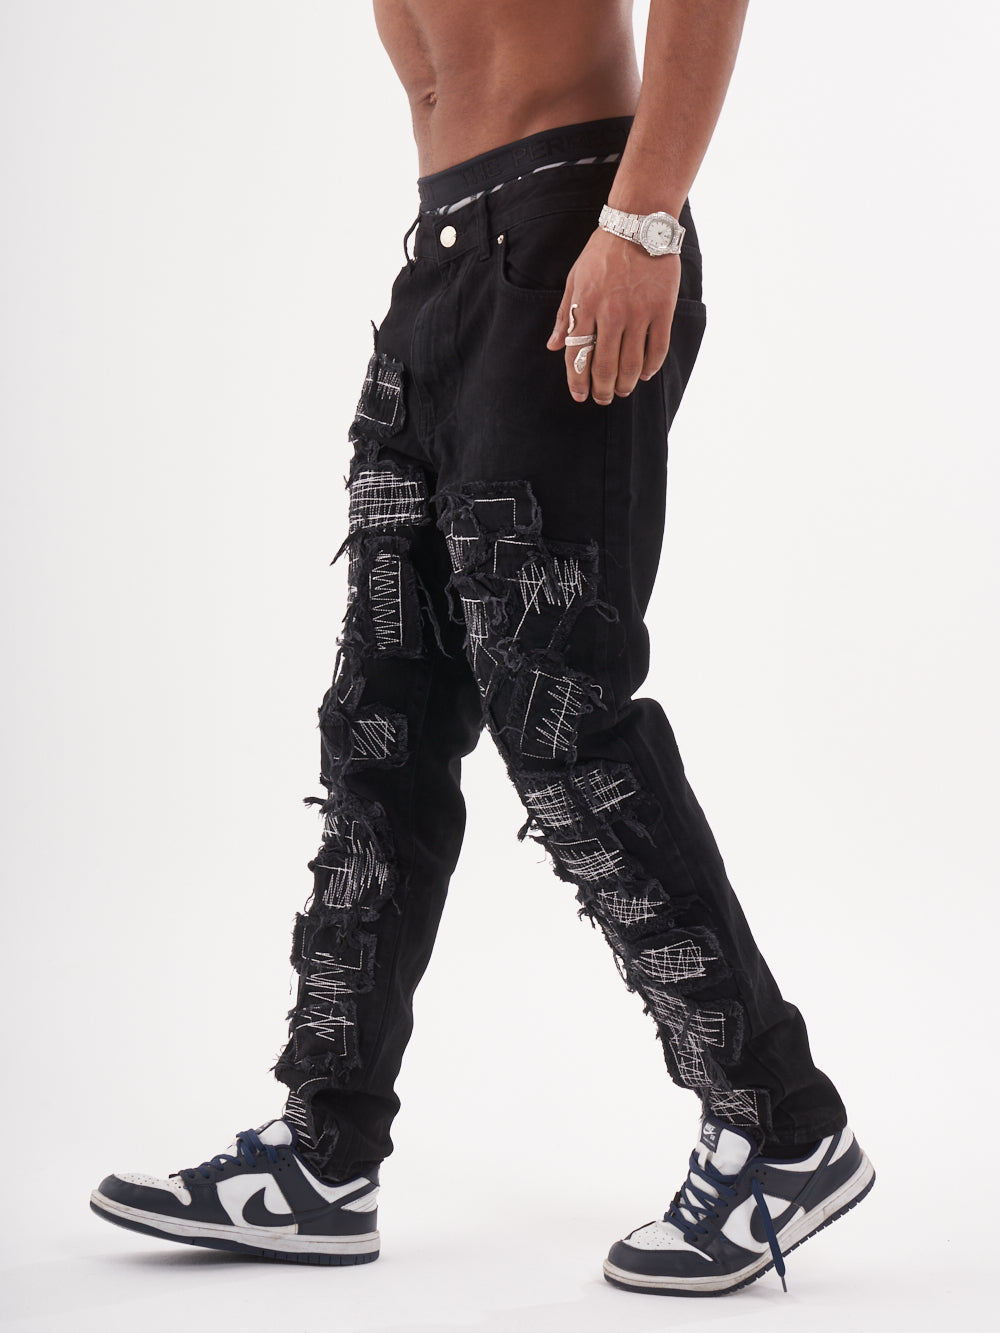 Lower body shot of a man in a black color BLUEPRINT streetwear jeans by SERNES